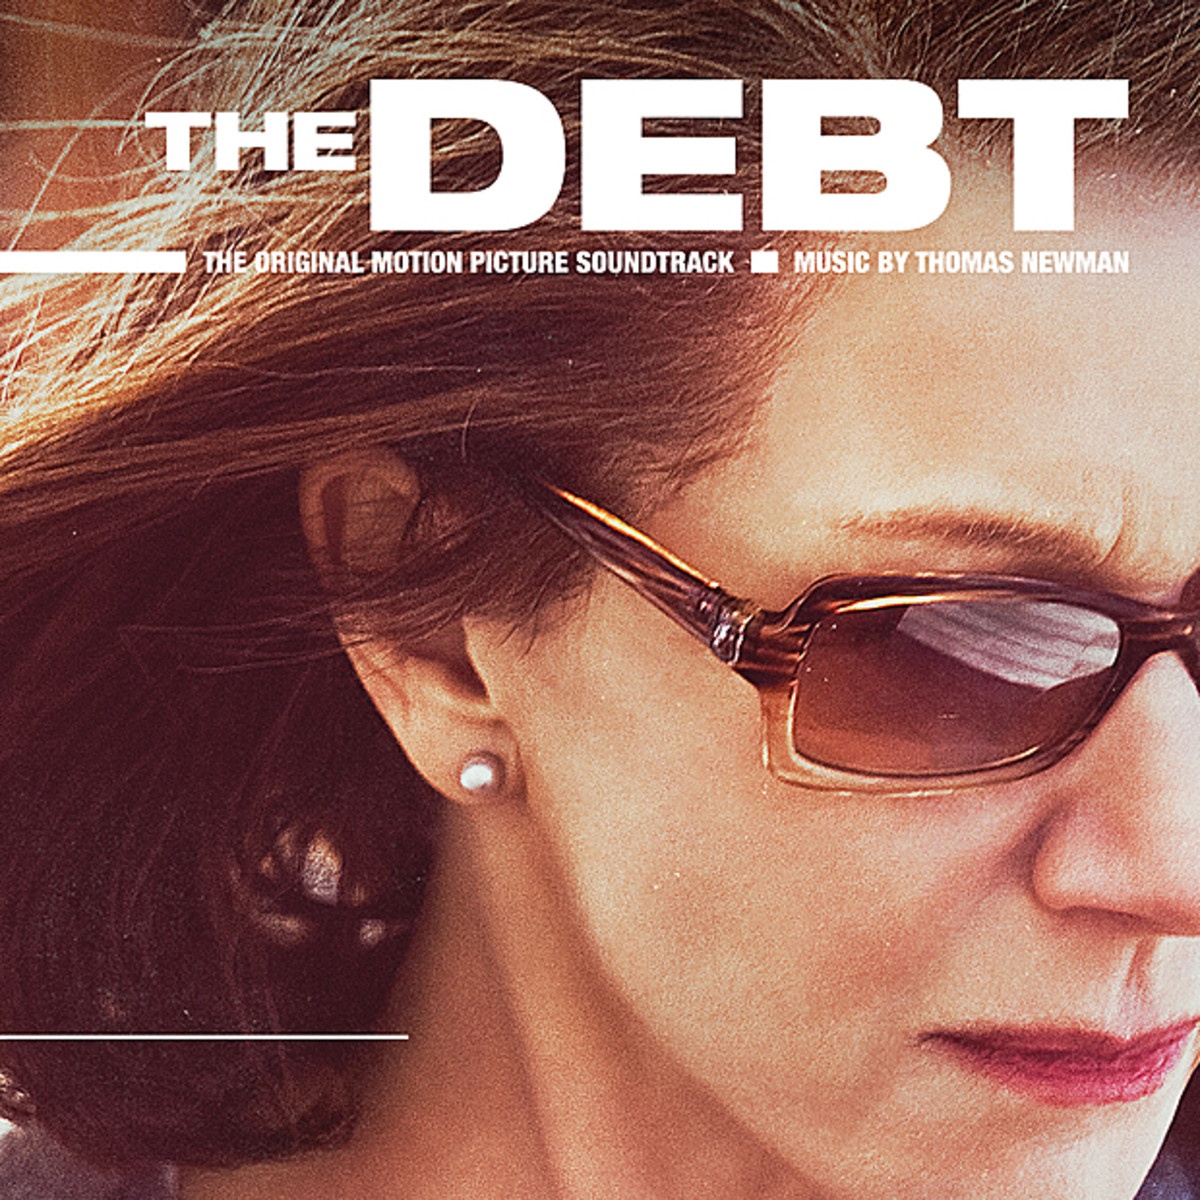 The Debt (Original Motion Picture Soundtrack)